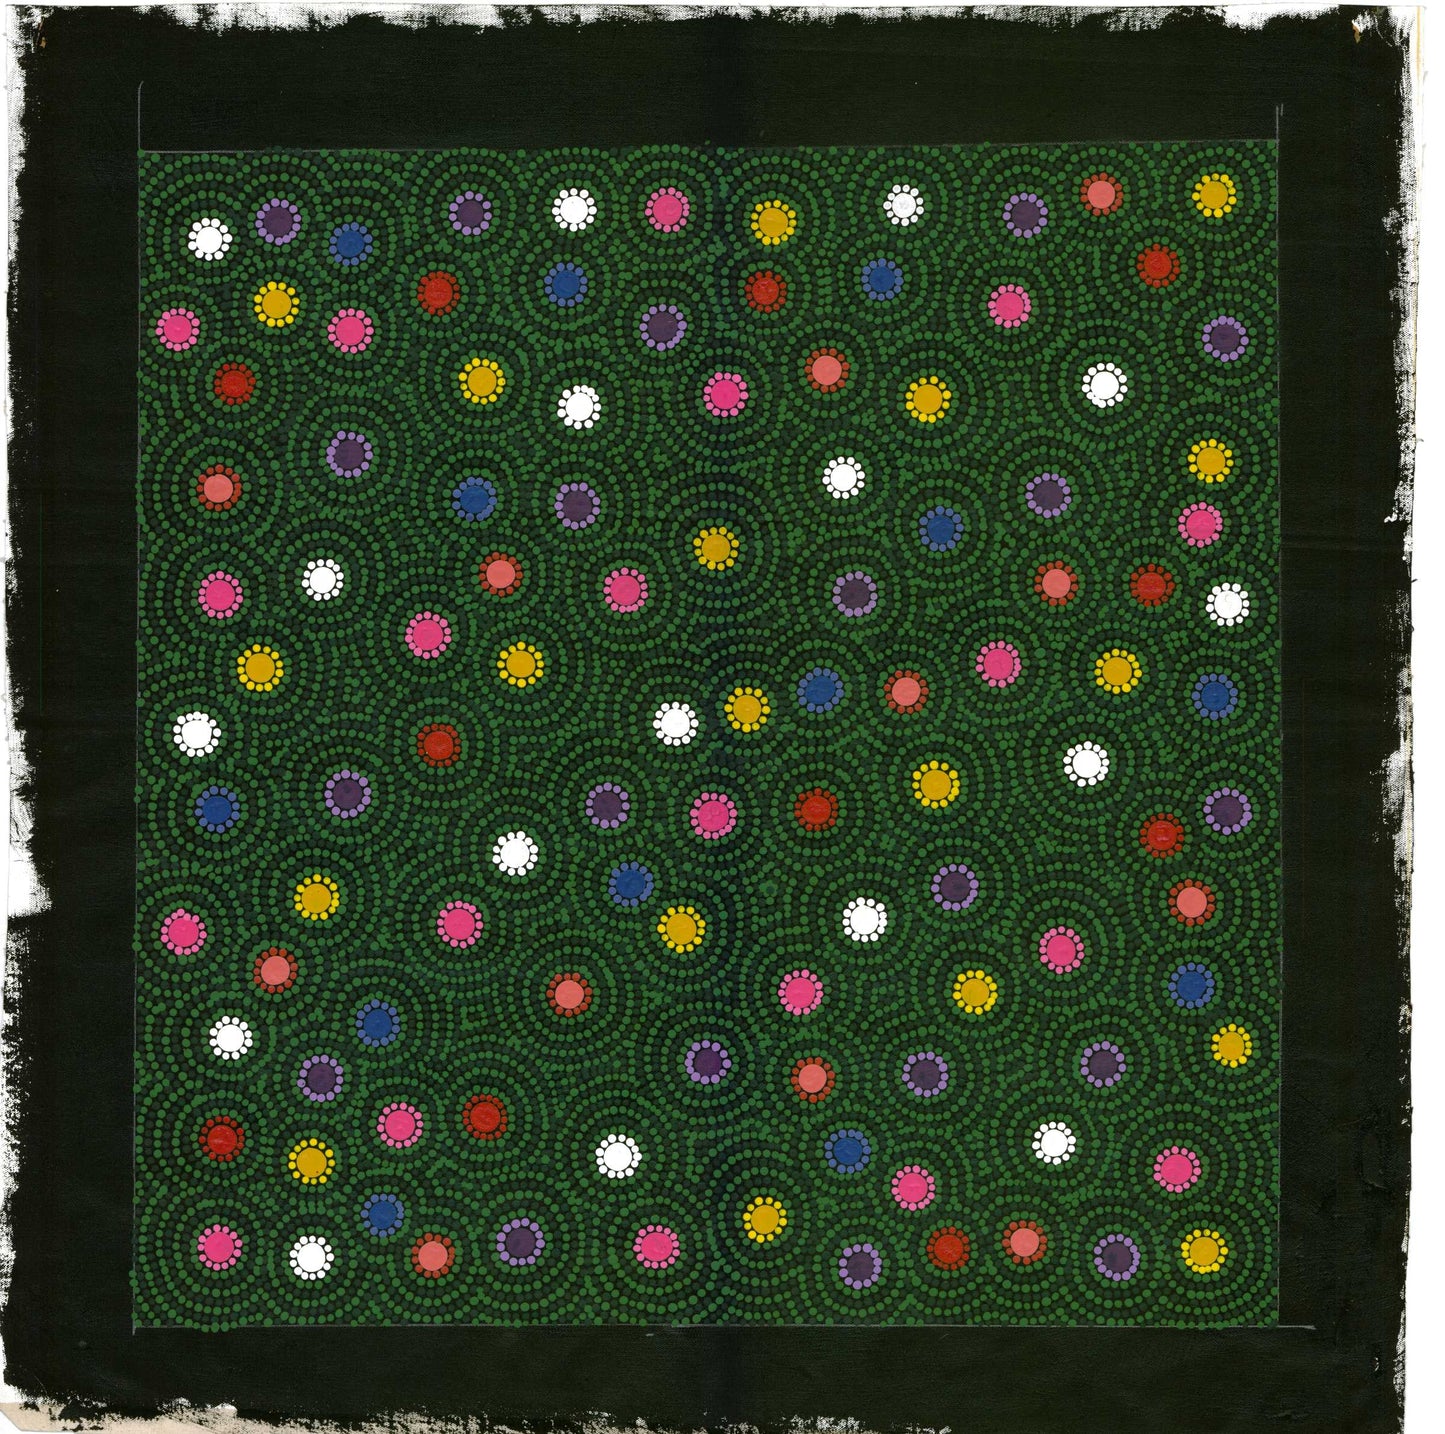 Wildflowers - Unframed on canvas - Stephen Berger (Arrernte)